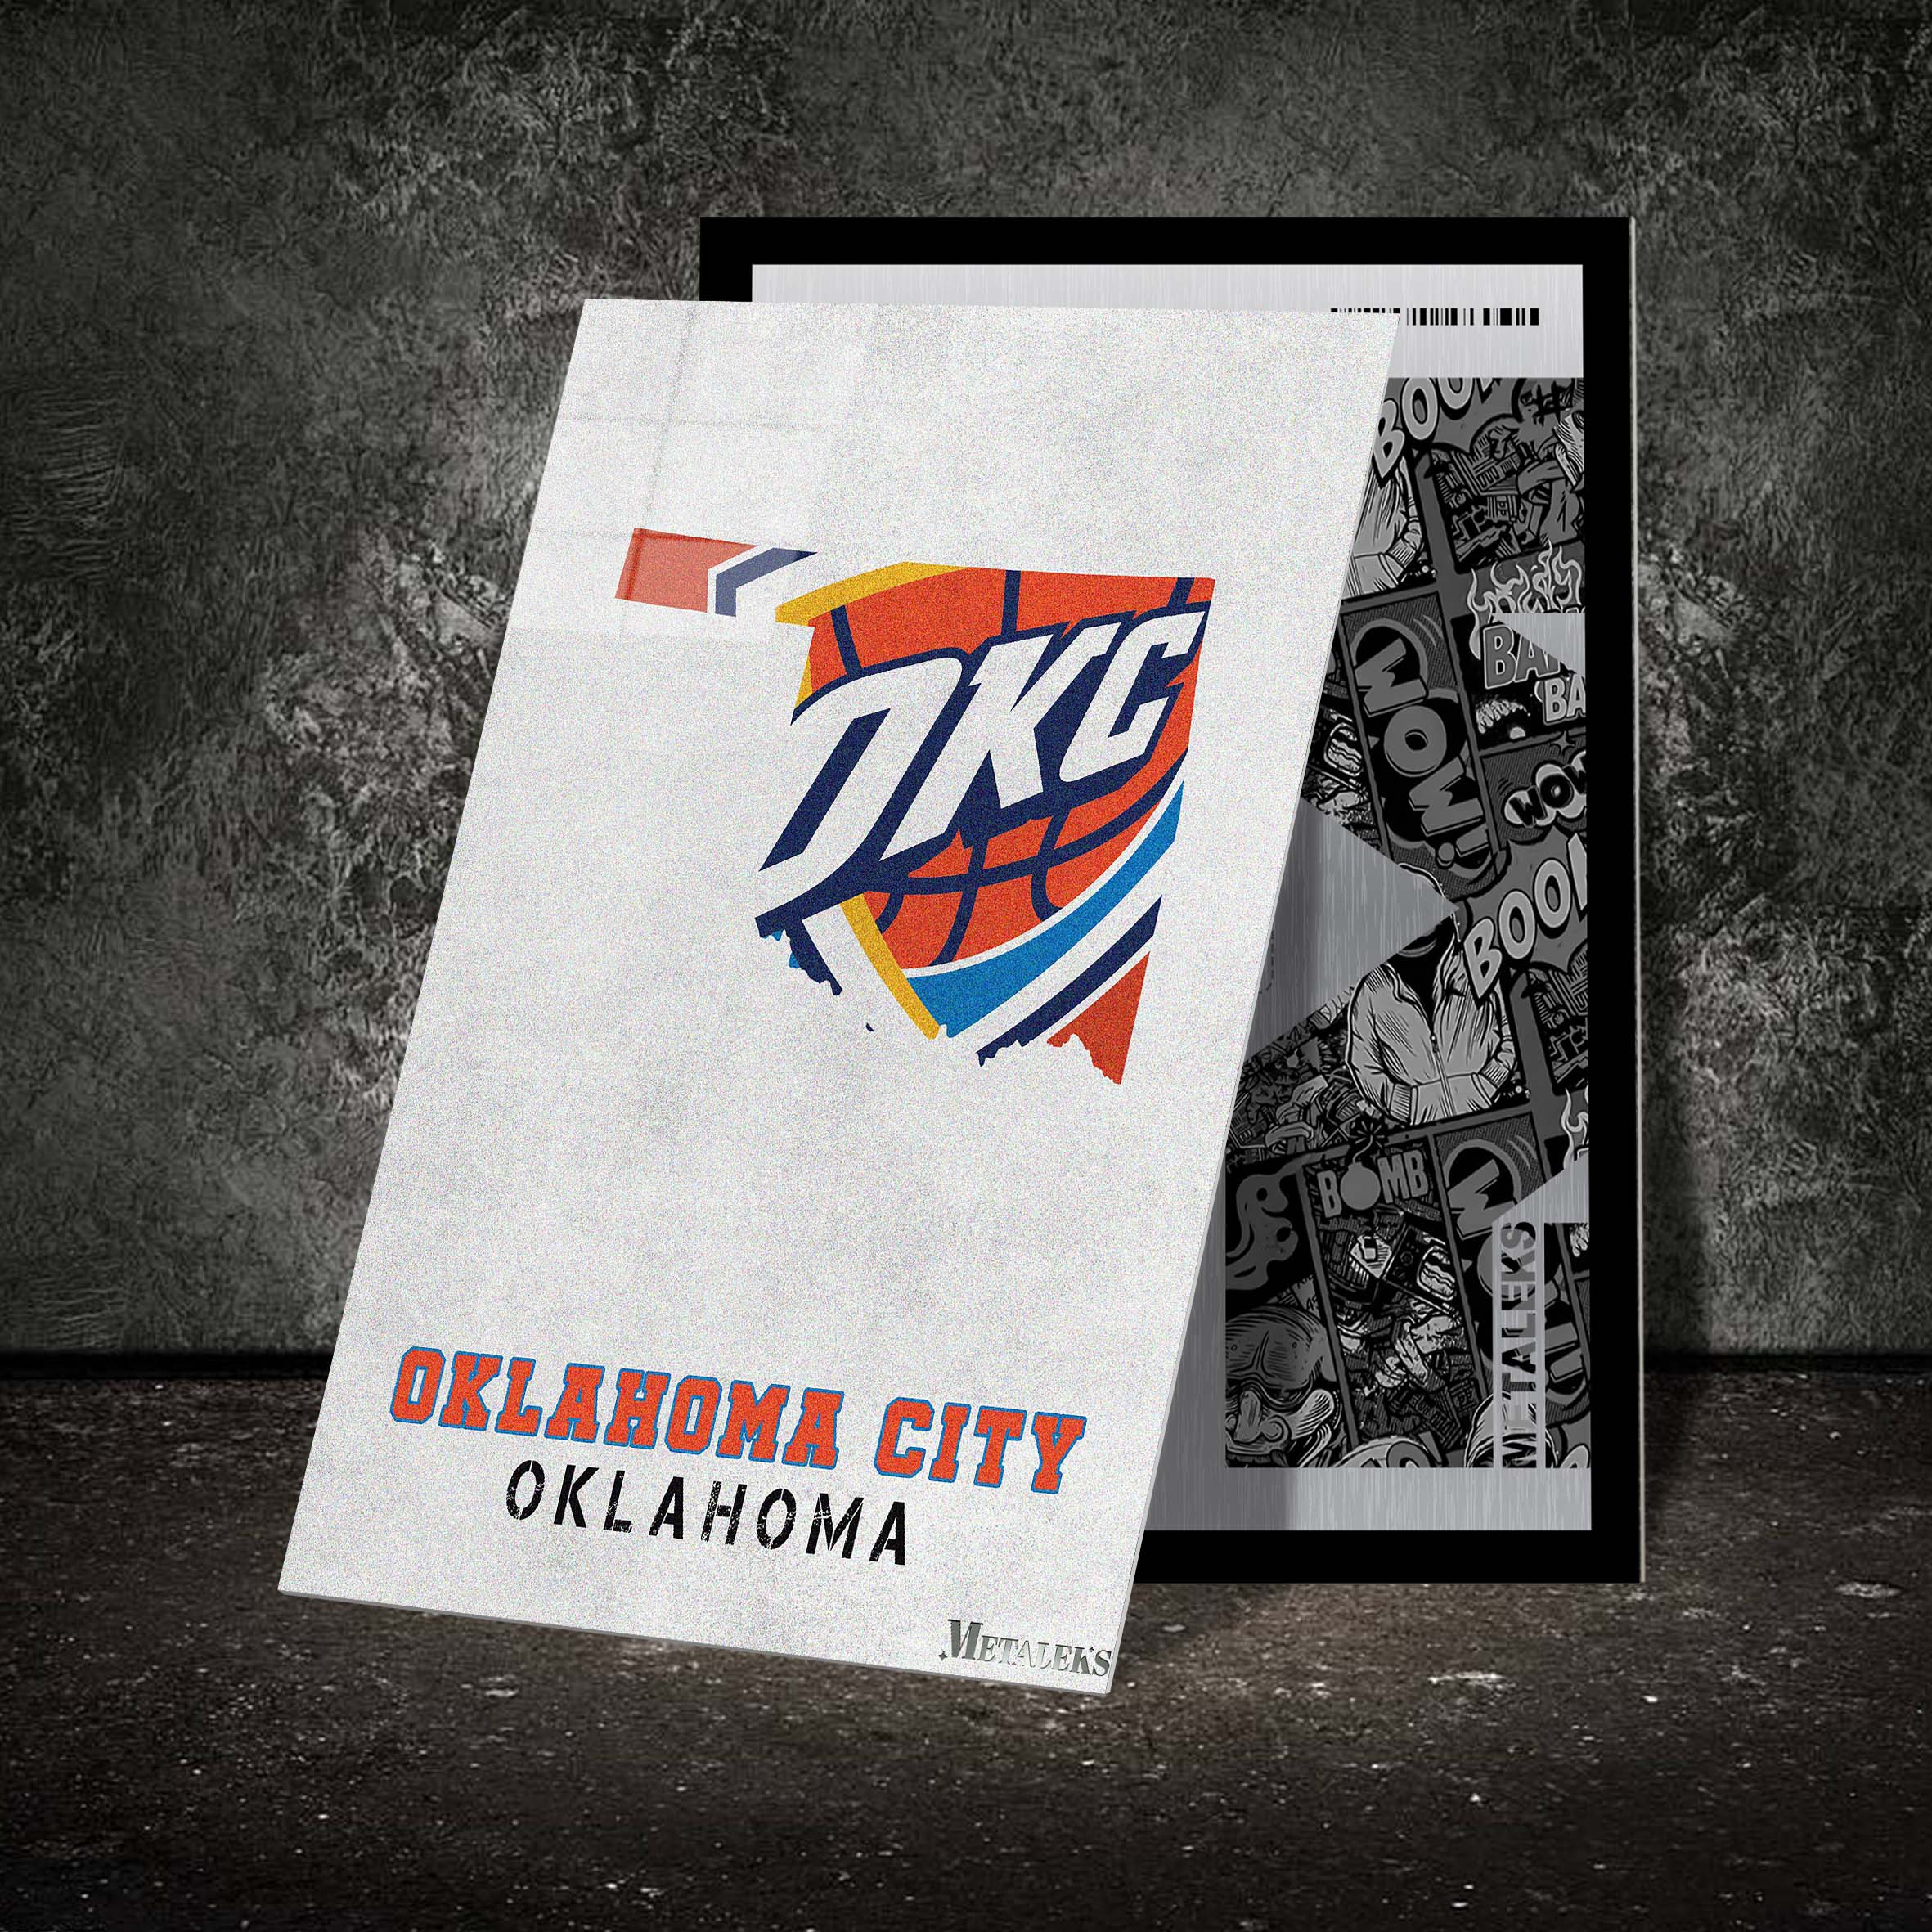 Oklahoma City Thunder-designed by @Hoang Van Thuan